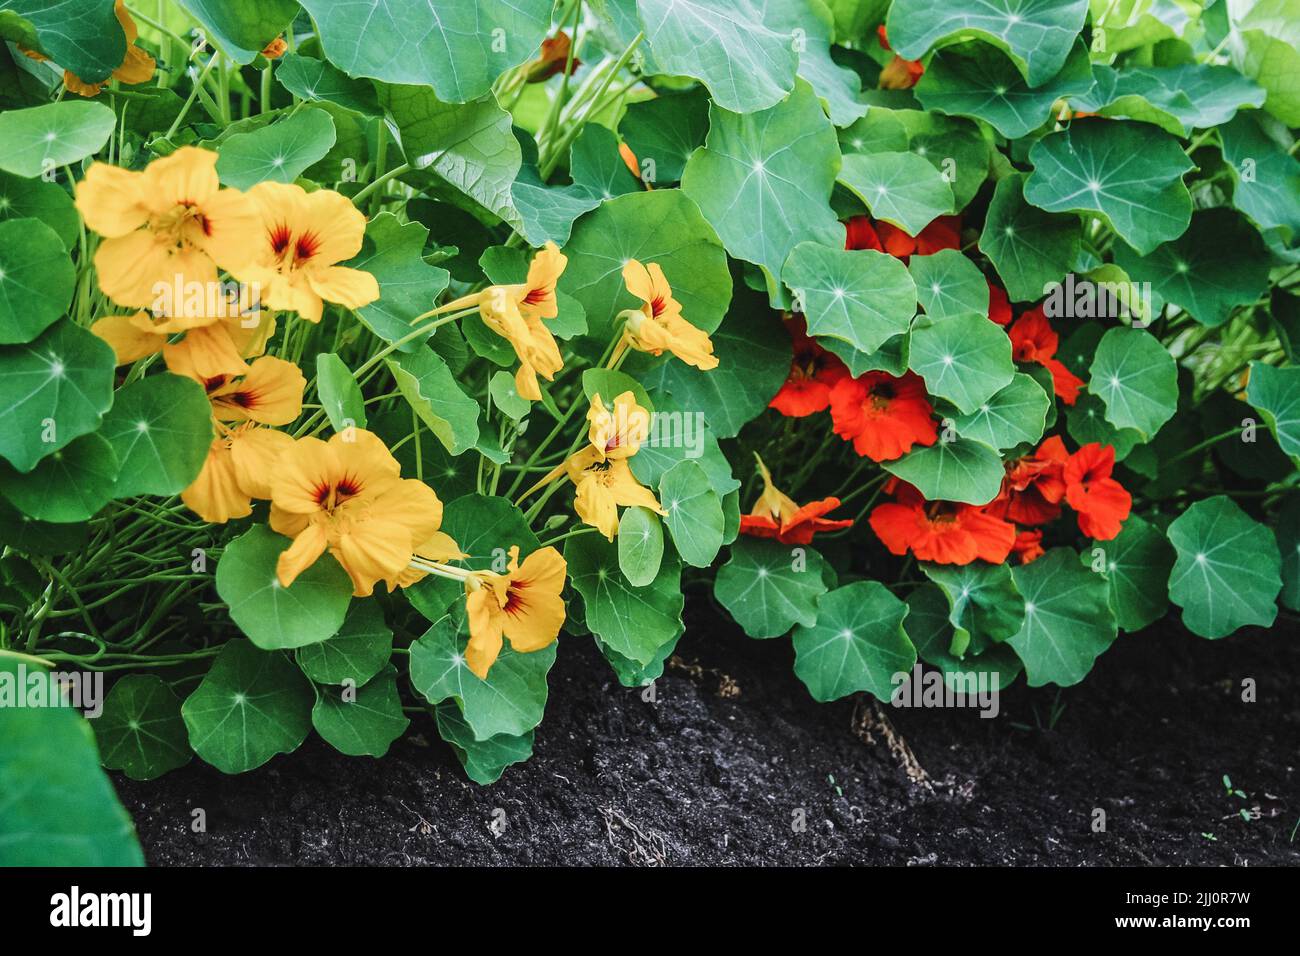 Blooming nasturtium plants with orange and yellow flowers, Tropaeolum majus in the garden Stock Photo